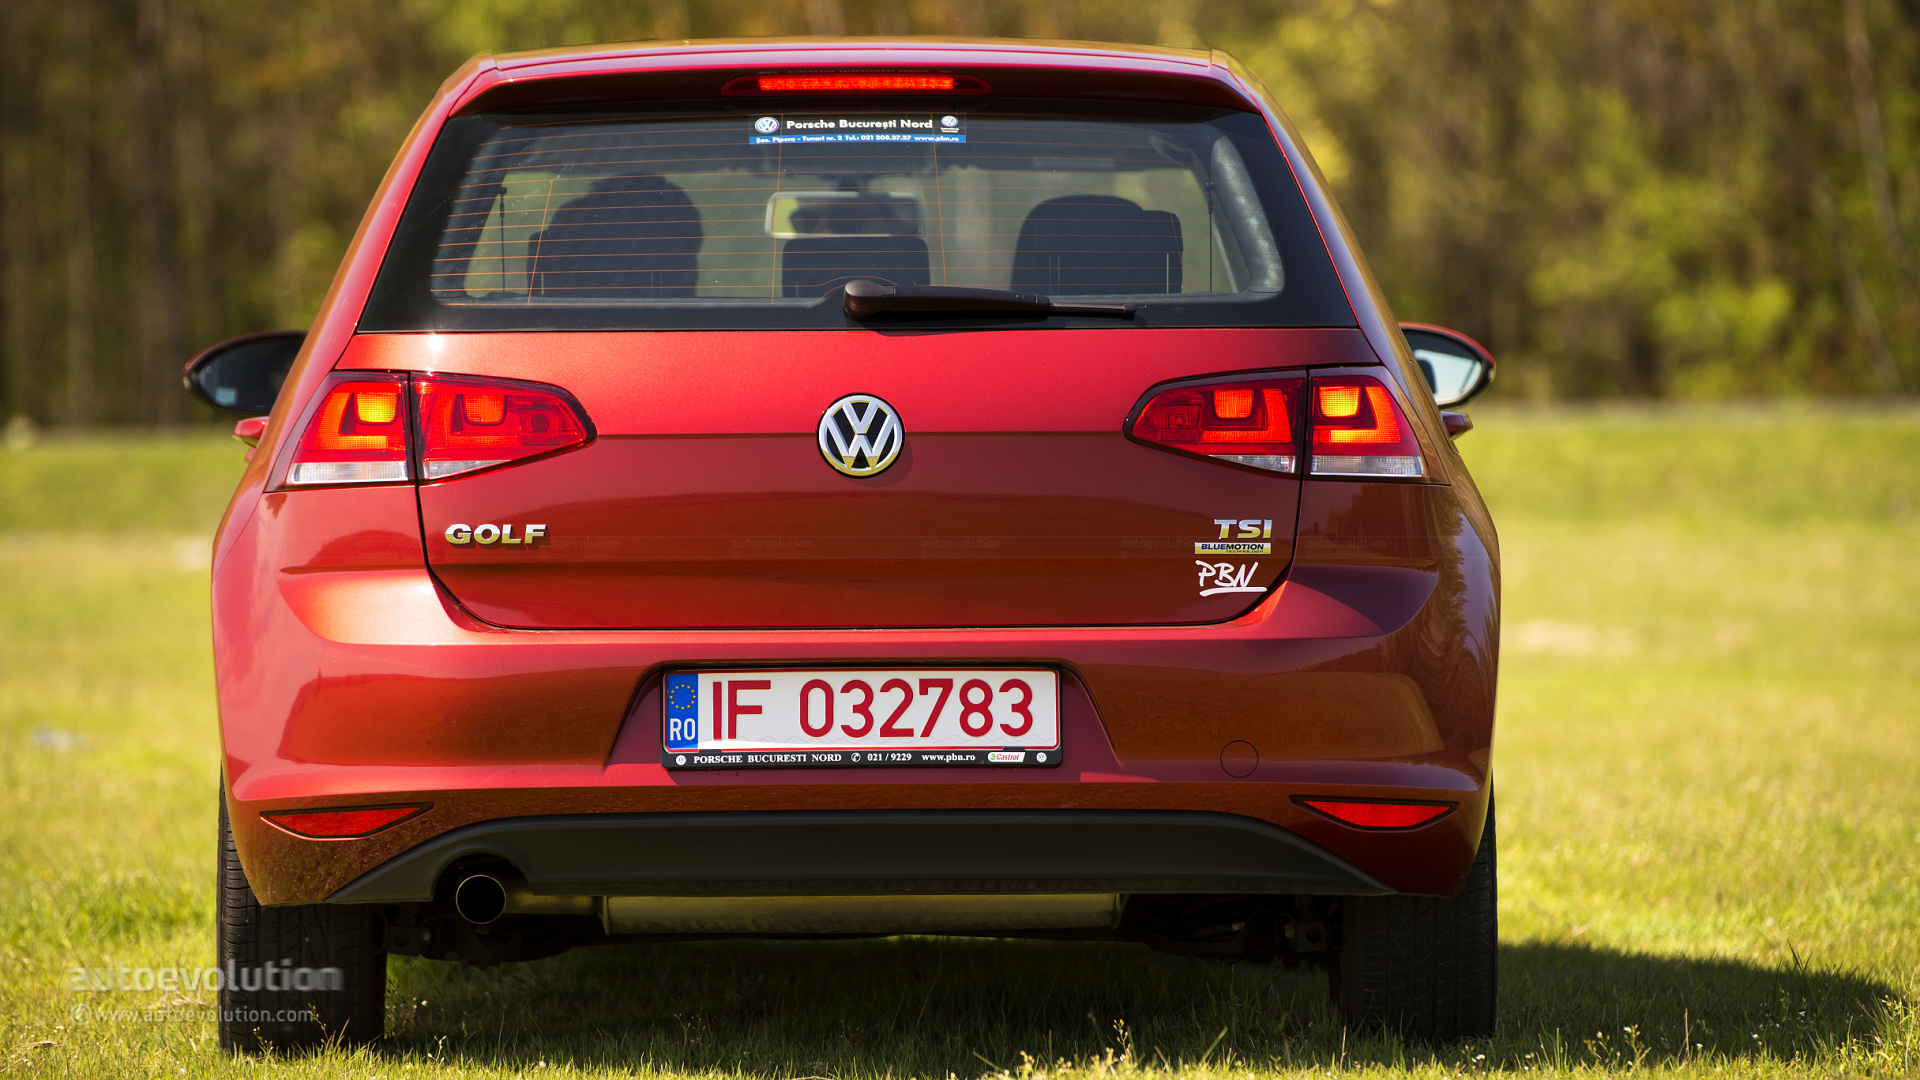 Volkswagen Golf 7 Review Autoevolution